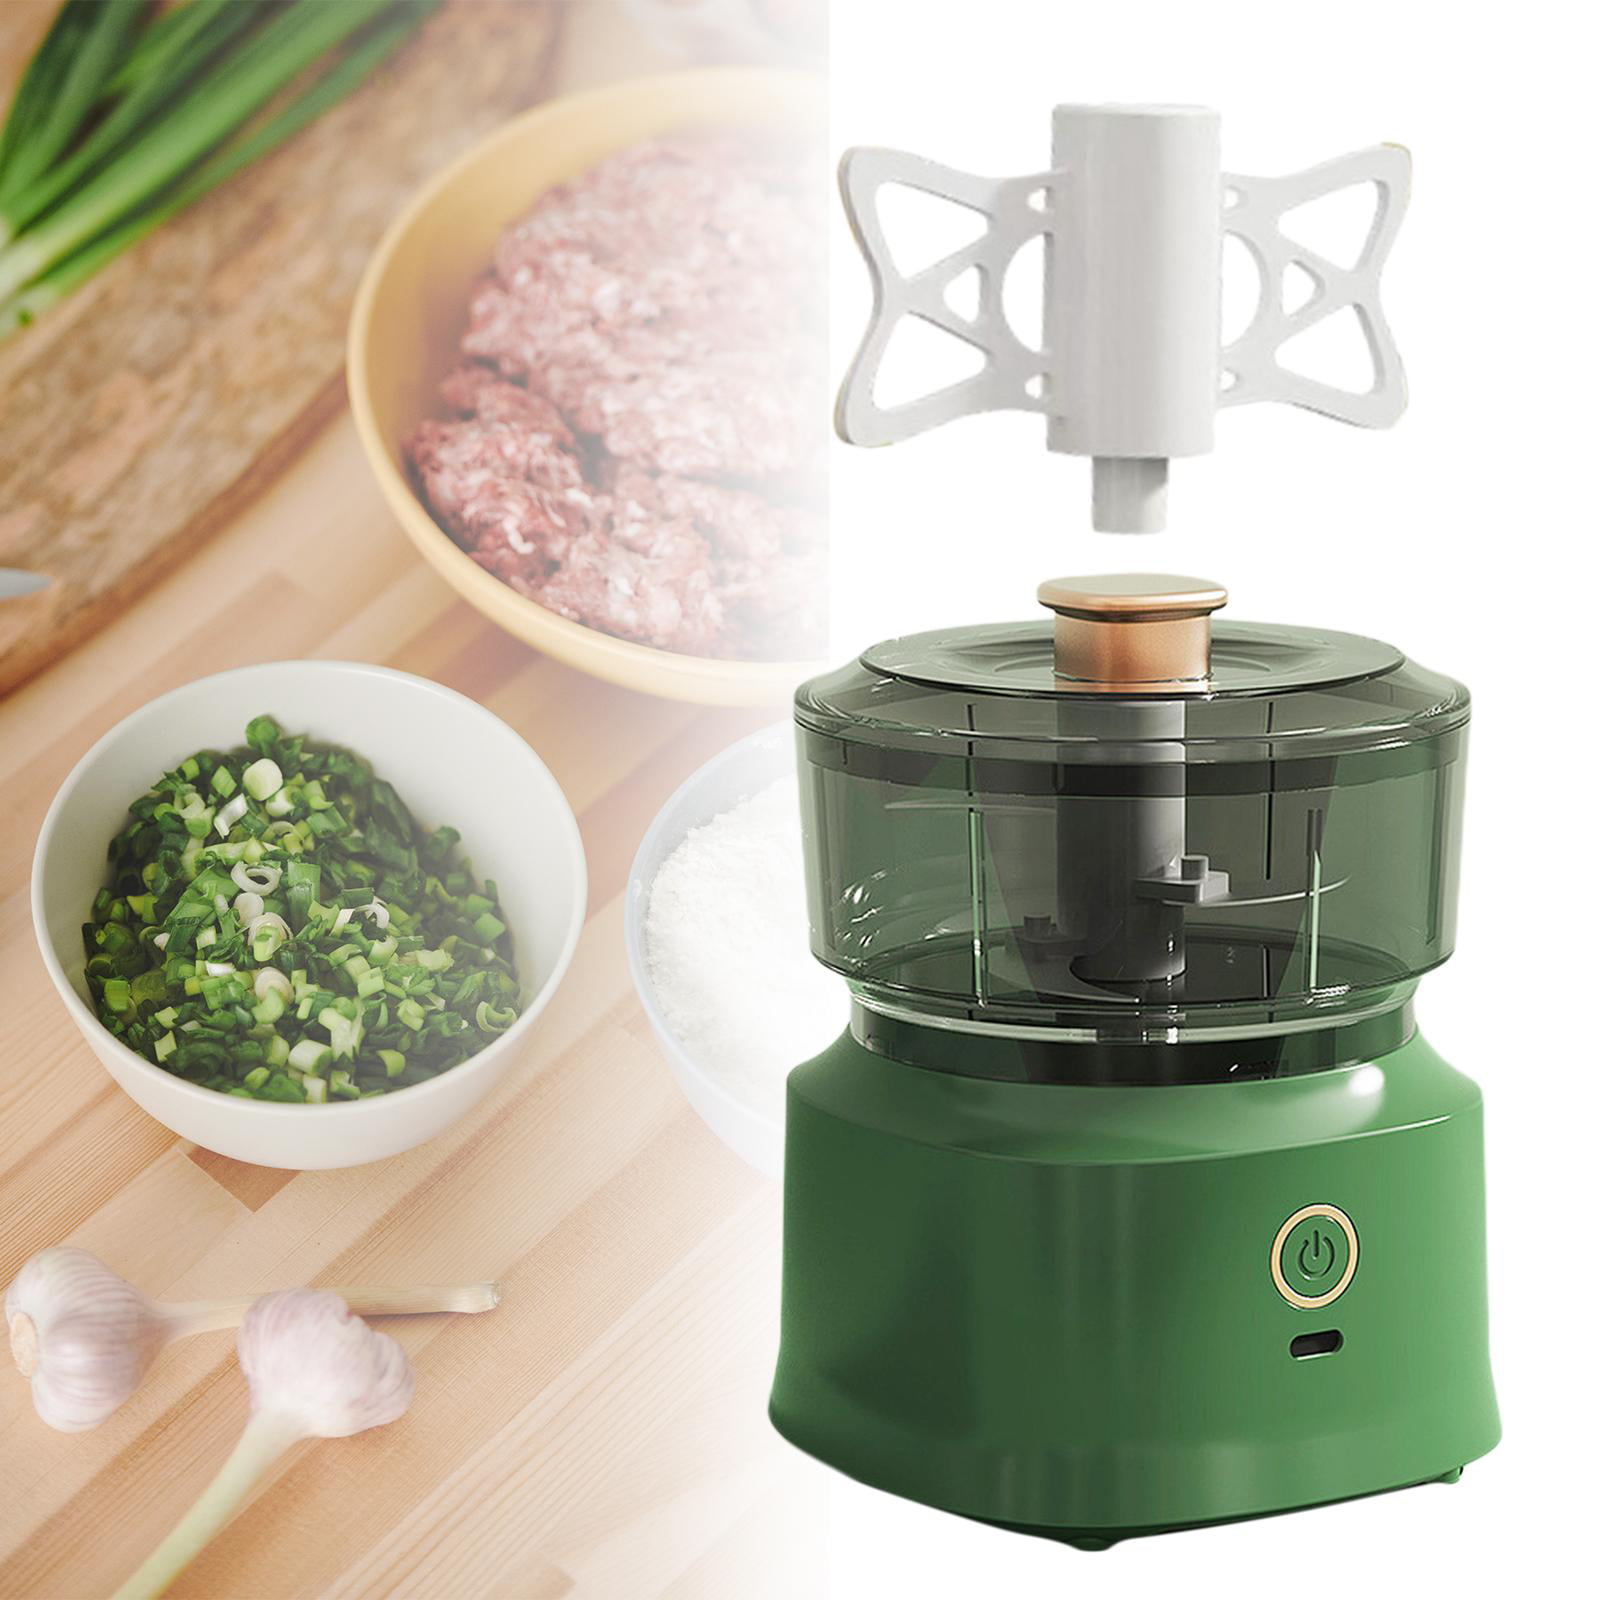 Bcooss Electric Mini Garlic Food Chopper Green Pepper Garlic Grinder White Food Processor Machine for Vegetable Seasoning Spices